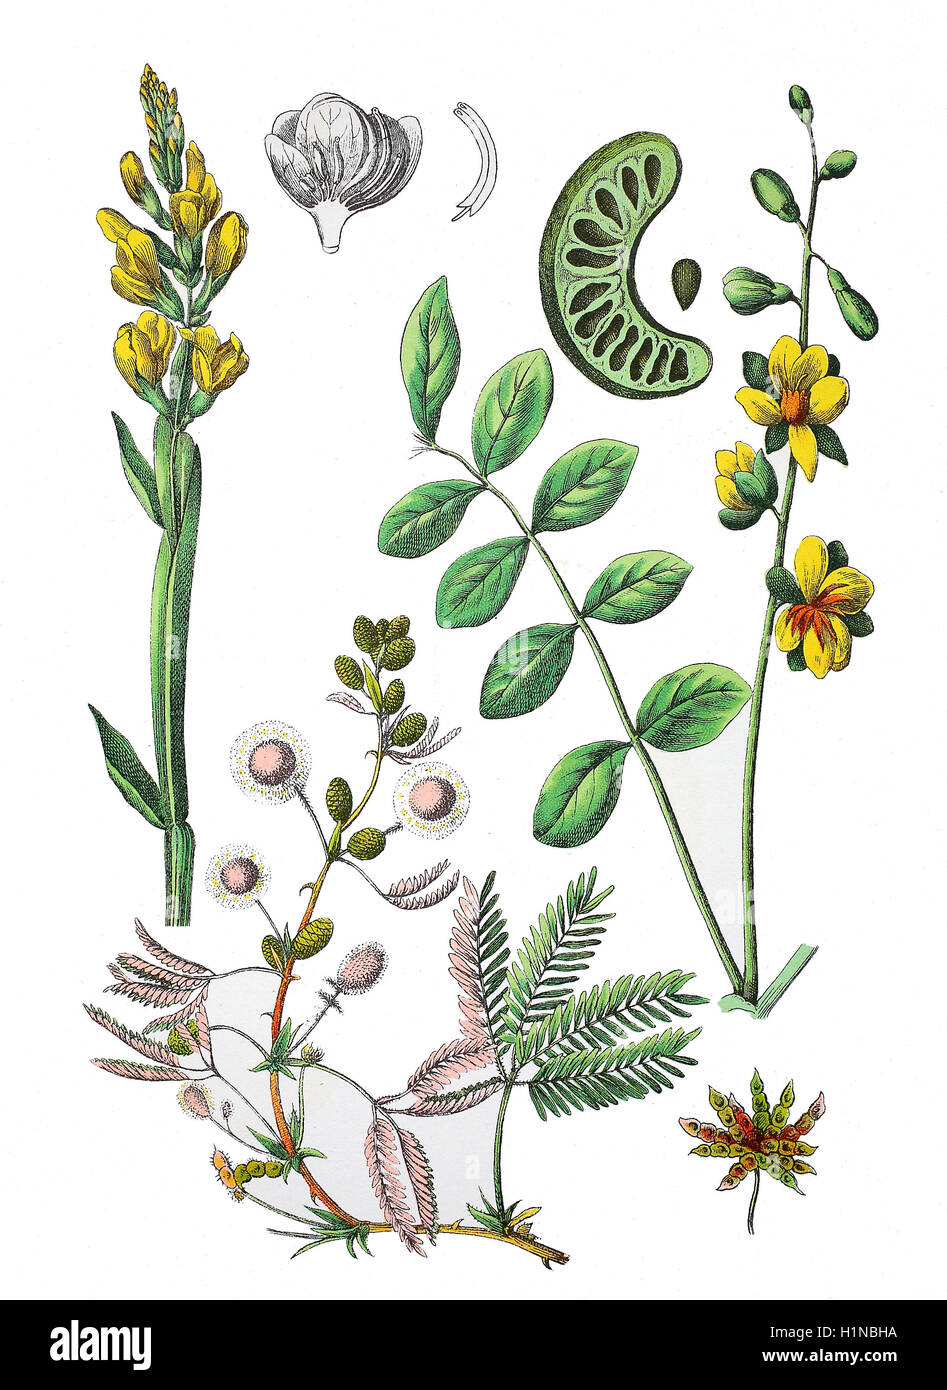 Broom, Genista sagittalis (left top), Chinese senna, Cassia obtusifolia (right top), sensitive plant, sleepy plant, Dormilone, Mimosa pudica (bottem), Stock Photo